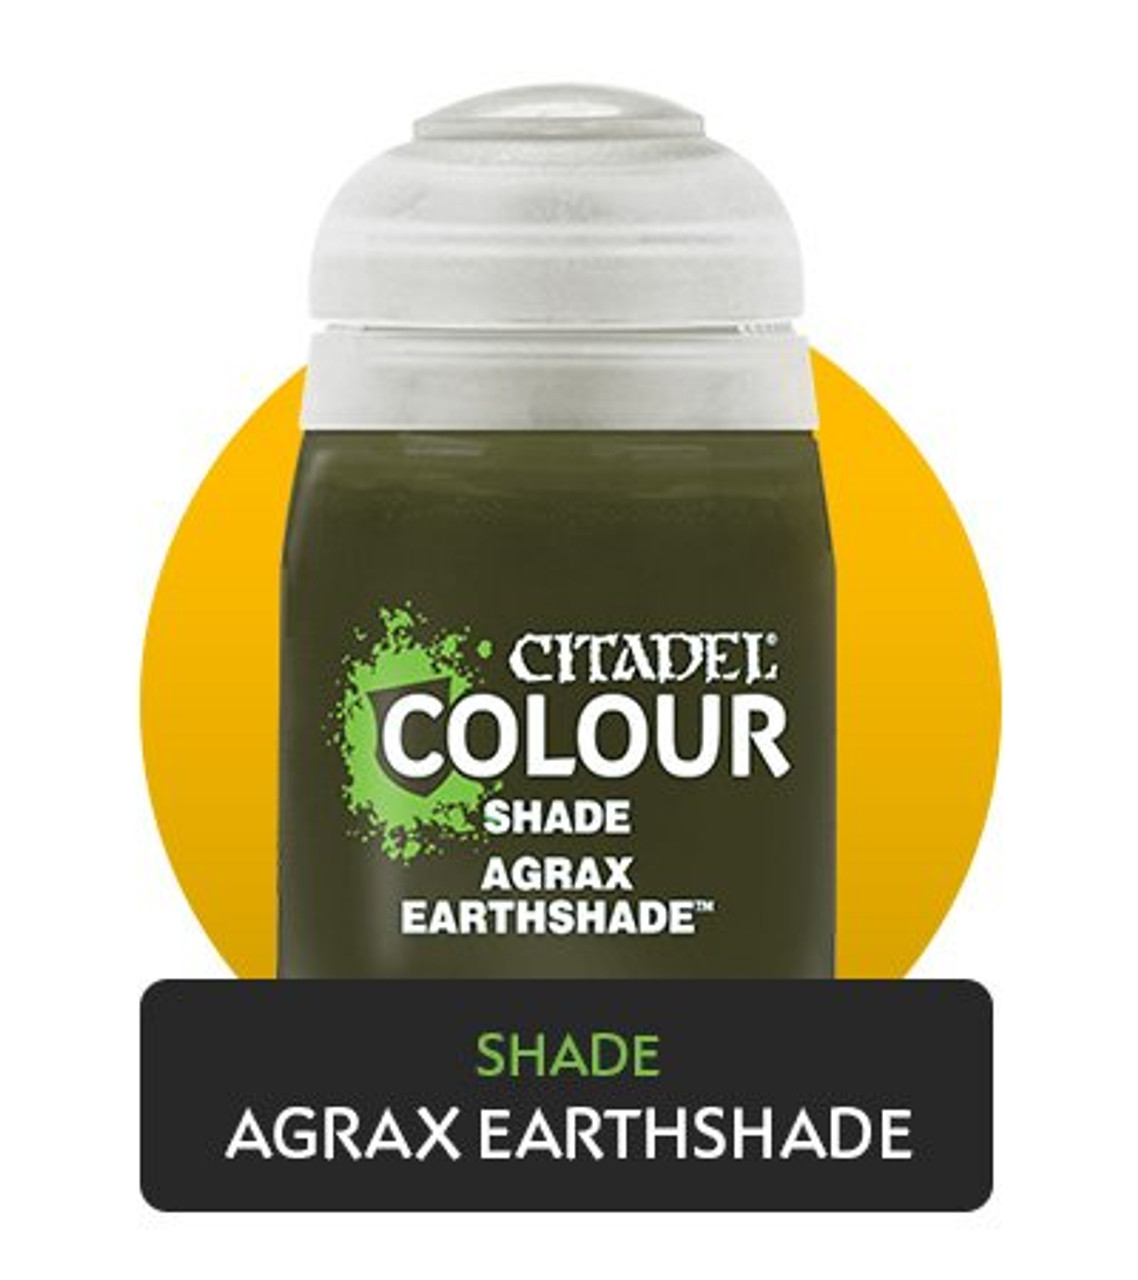 Citadel Shade Agrax Earthshade Paint